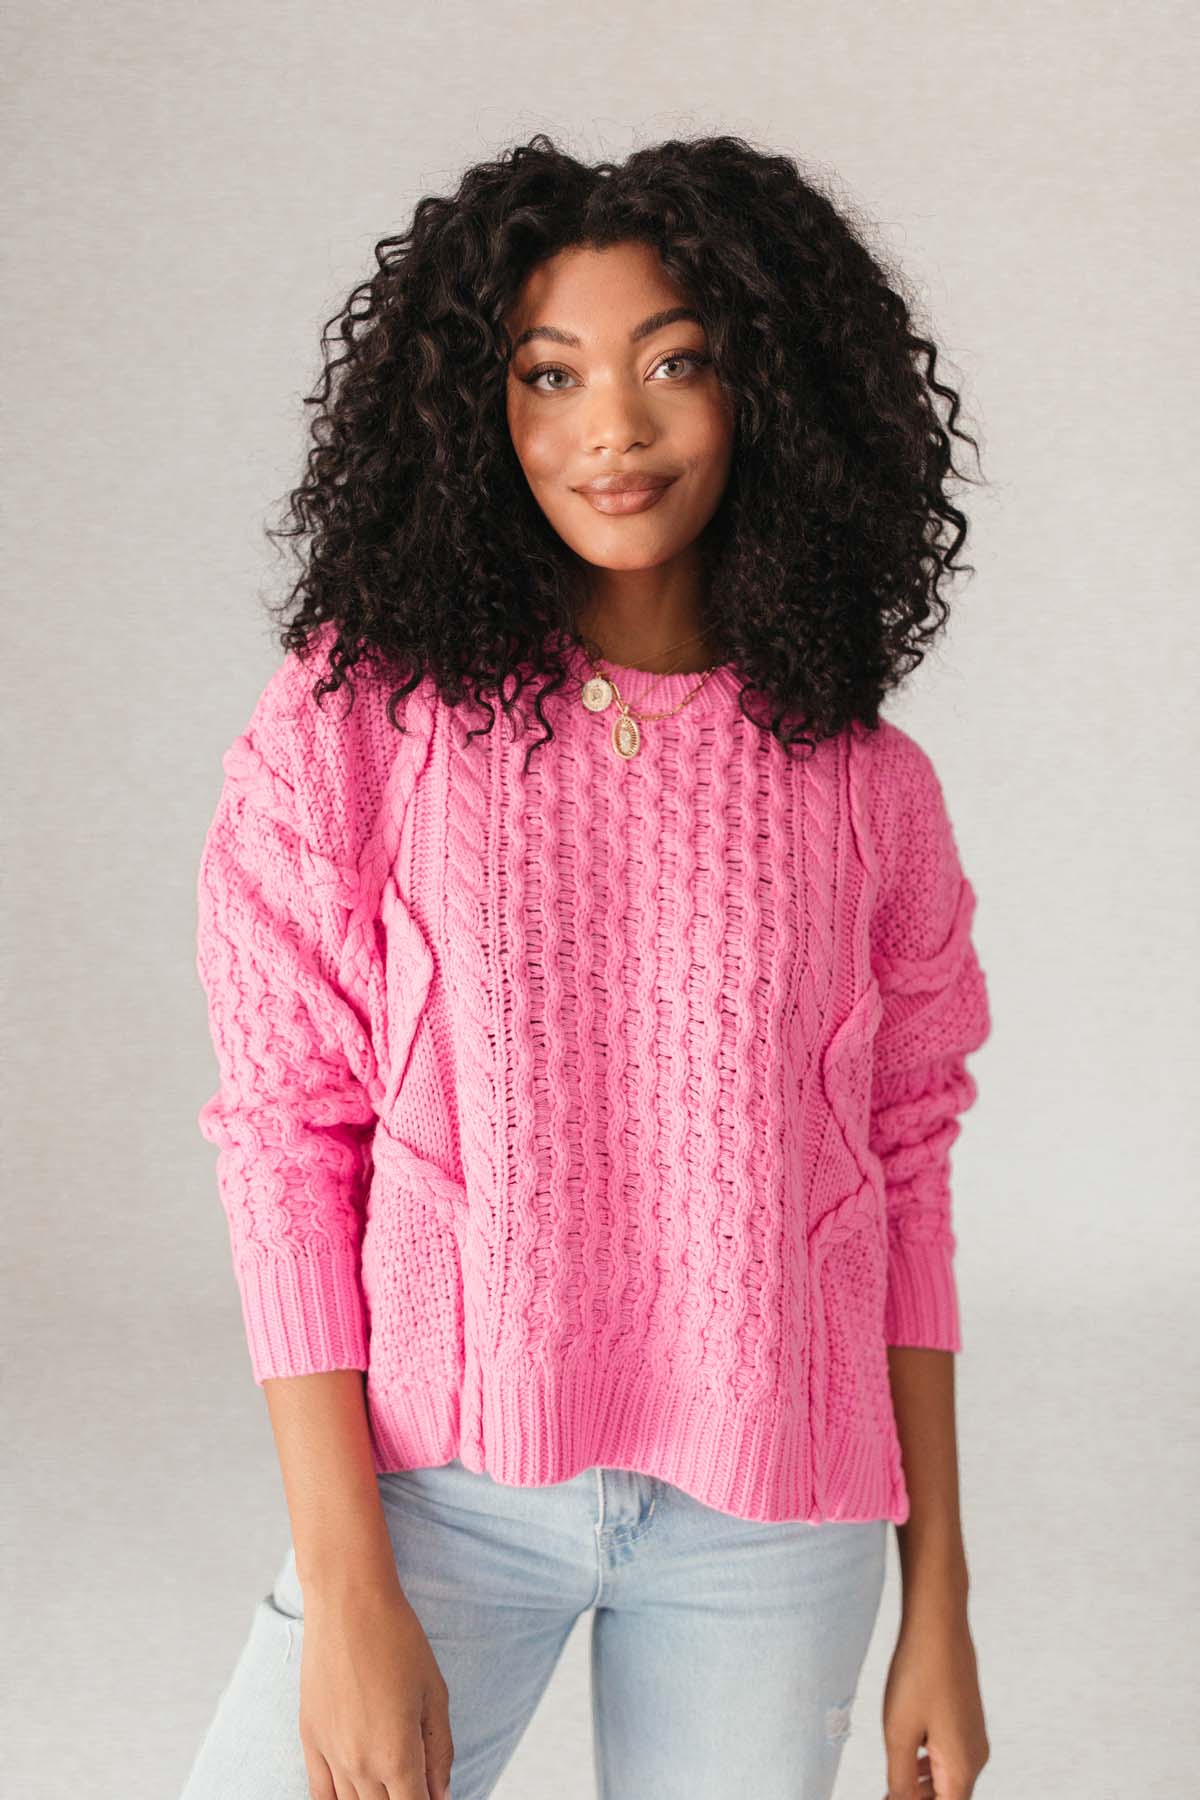 RESTOCK - Textured Knit Sweater